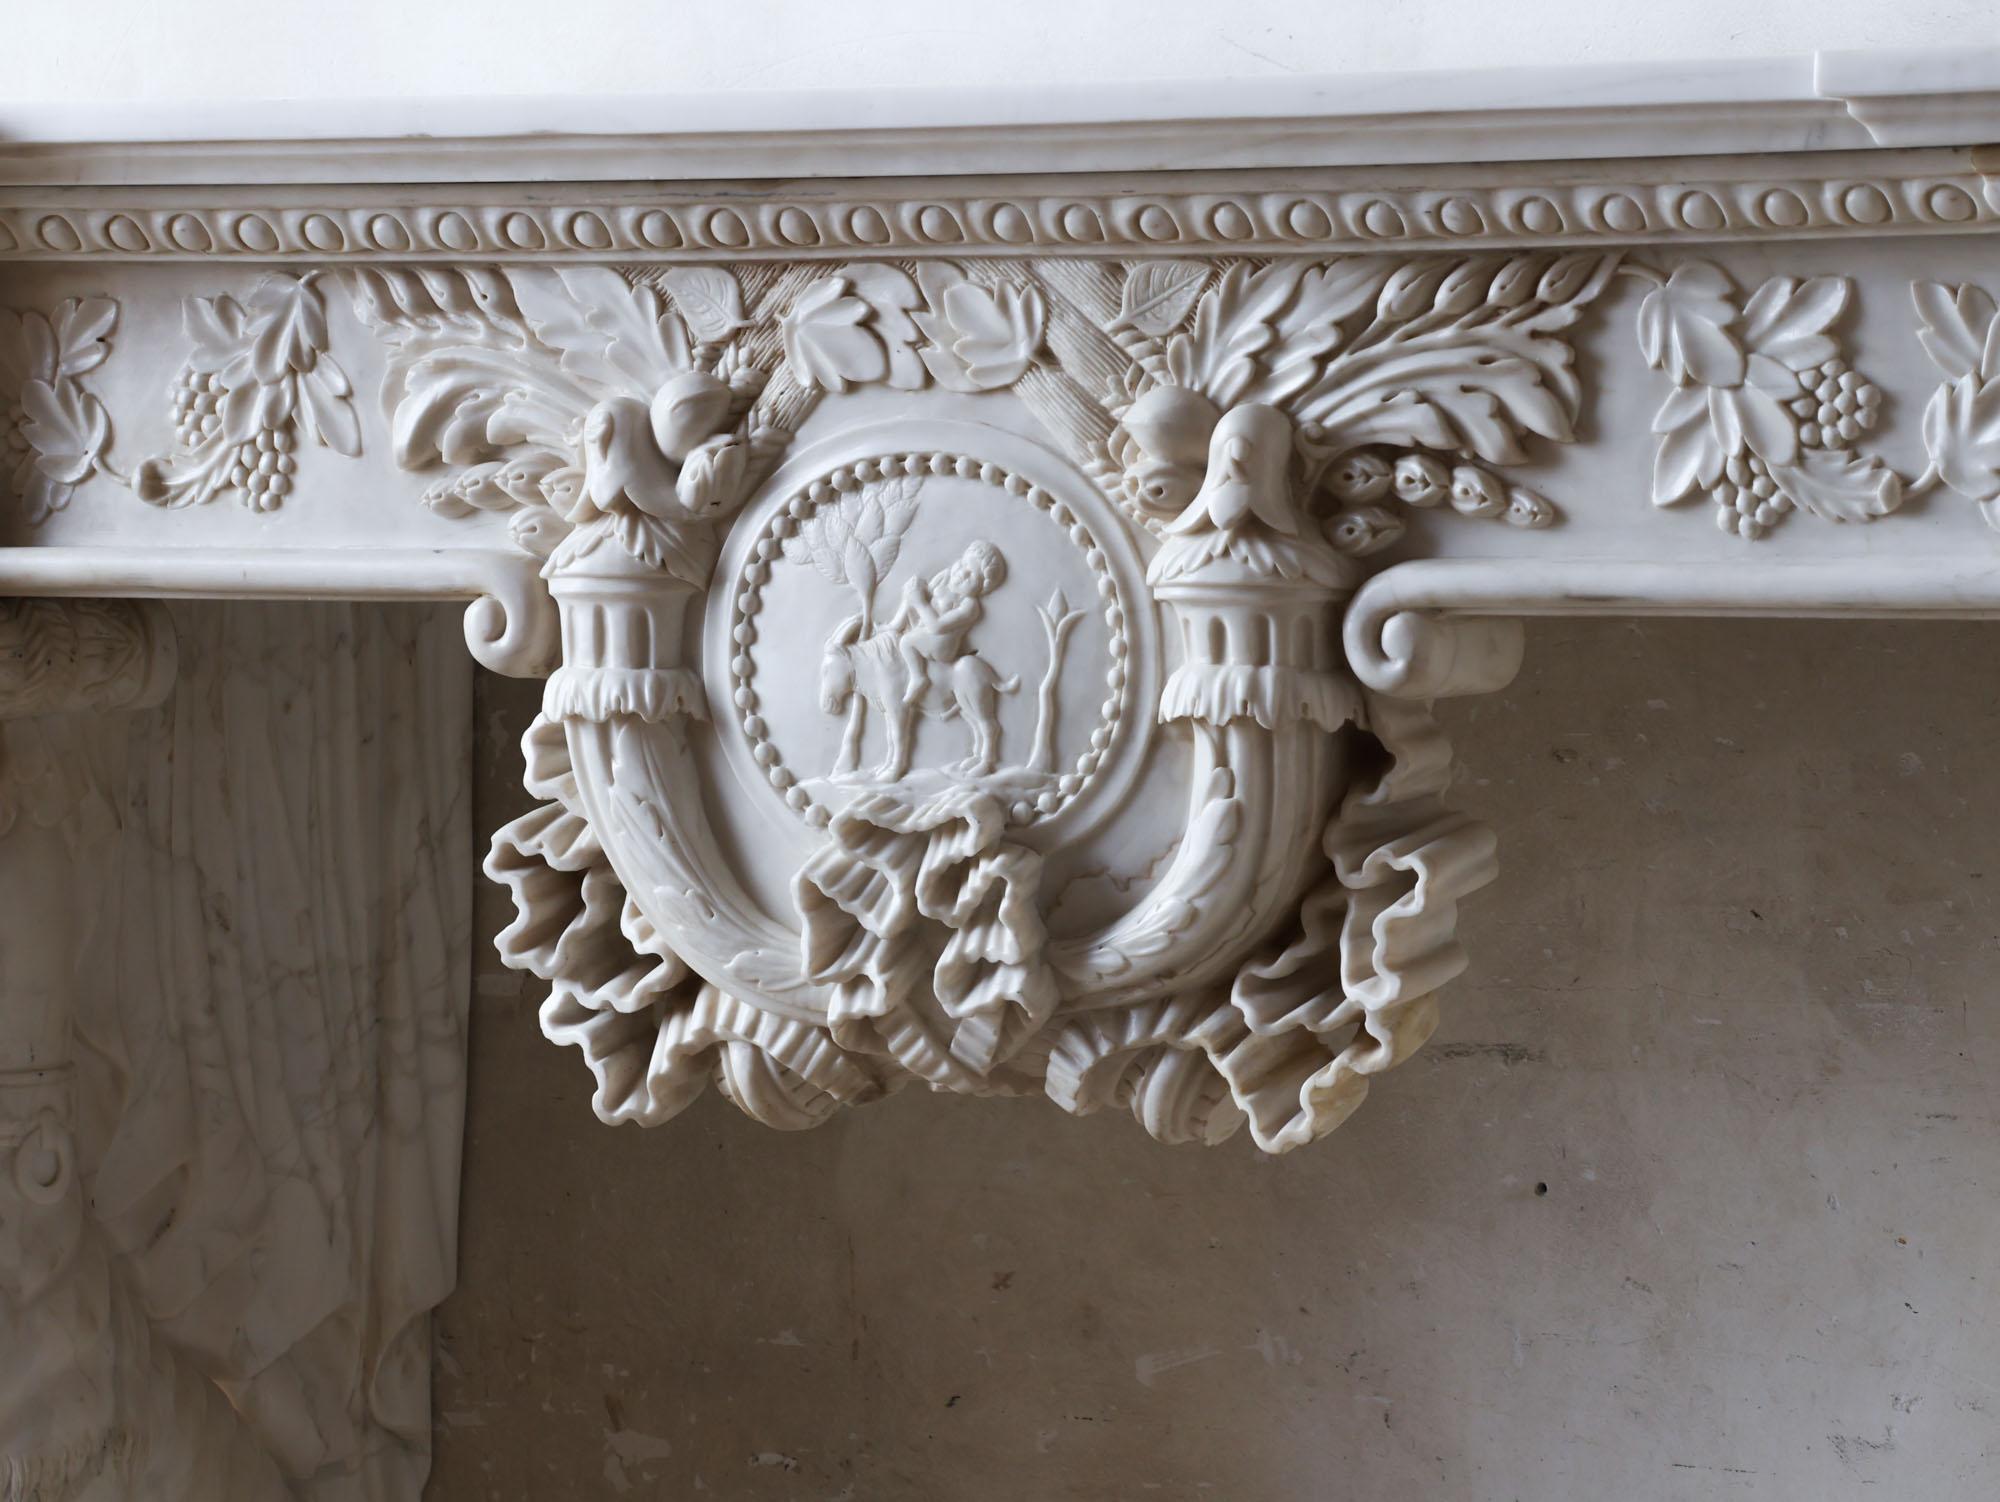 Carrara Marble A Rich and Ornate Monumental Mantelpiece Italian Renaissance Revival Style For Sale